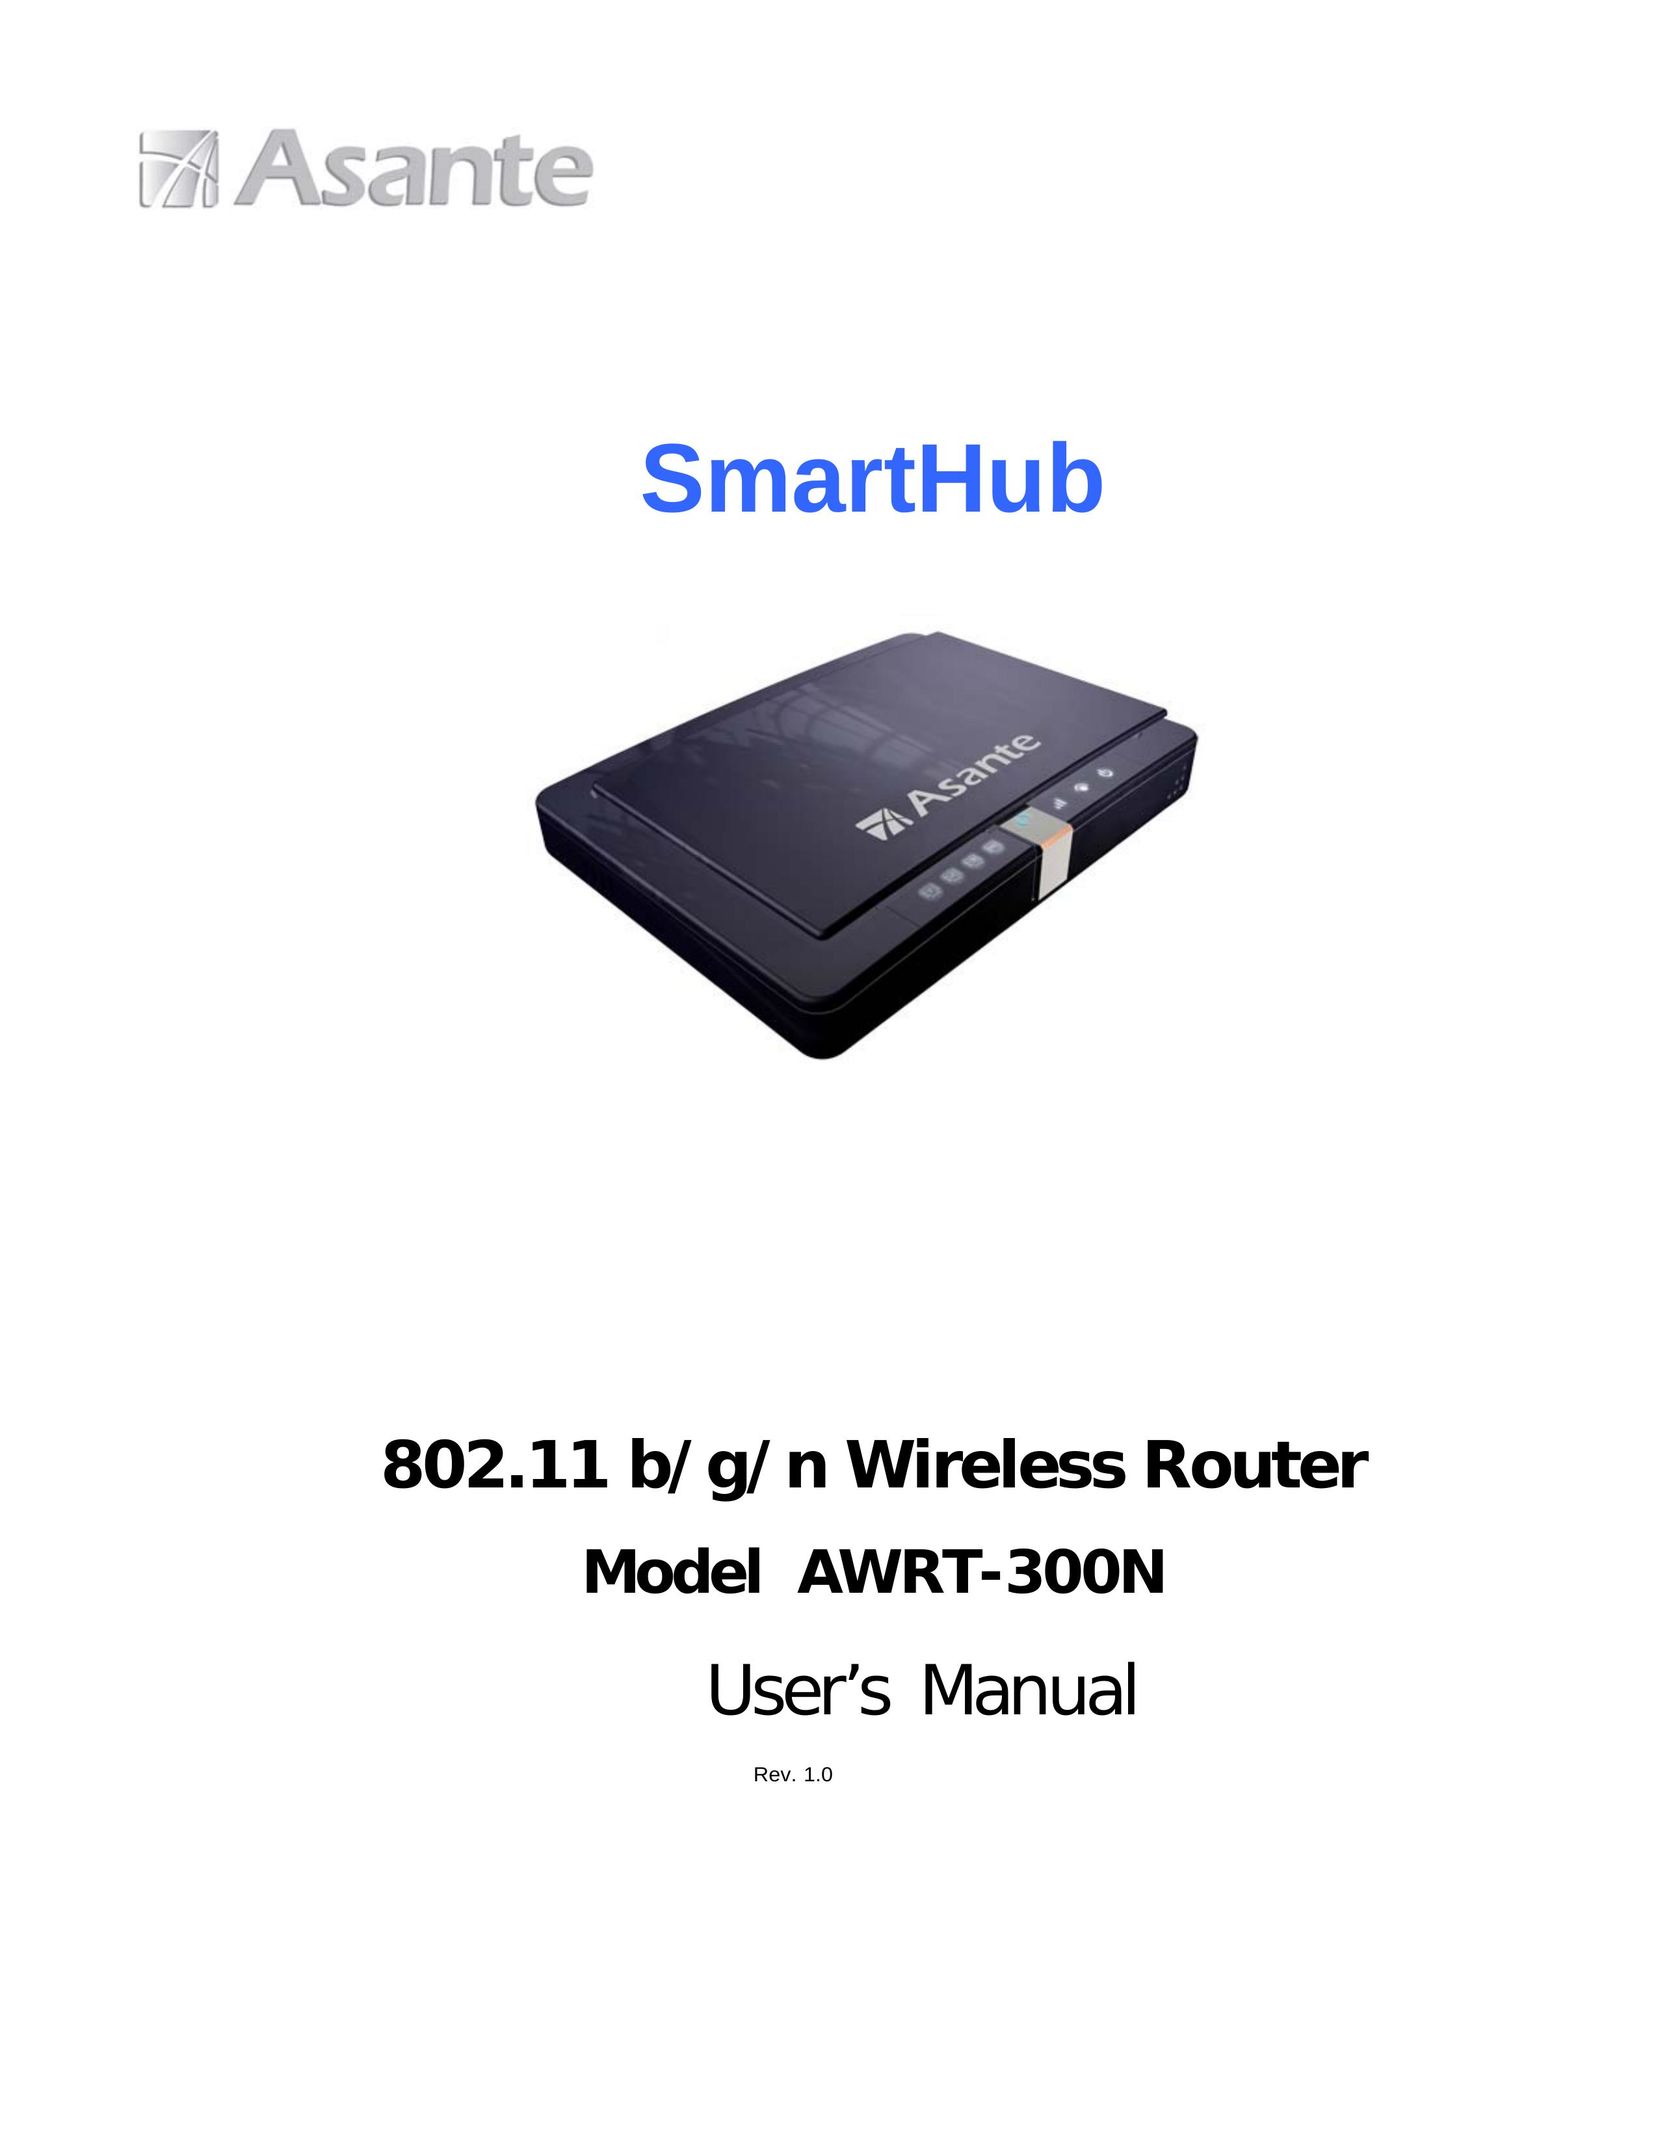 Asante Technologies AWRT-300N Network Router User Manual